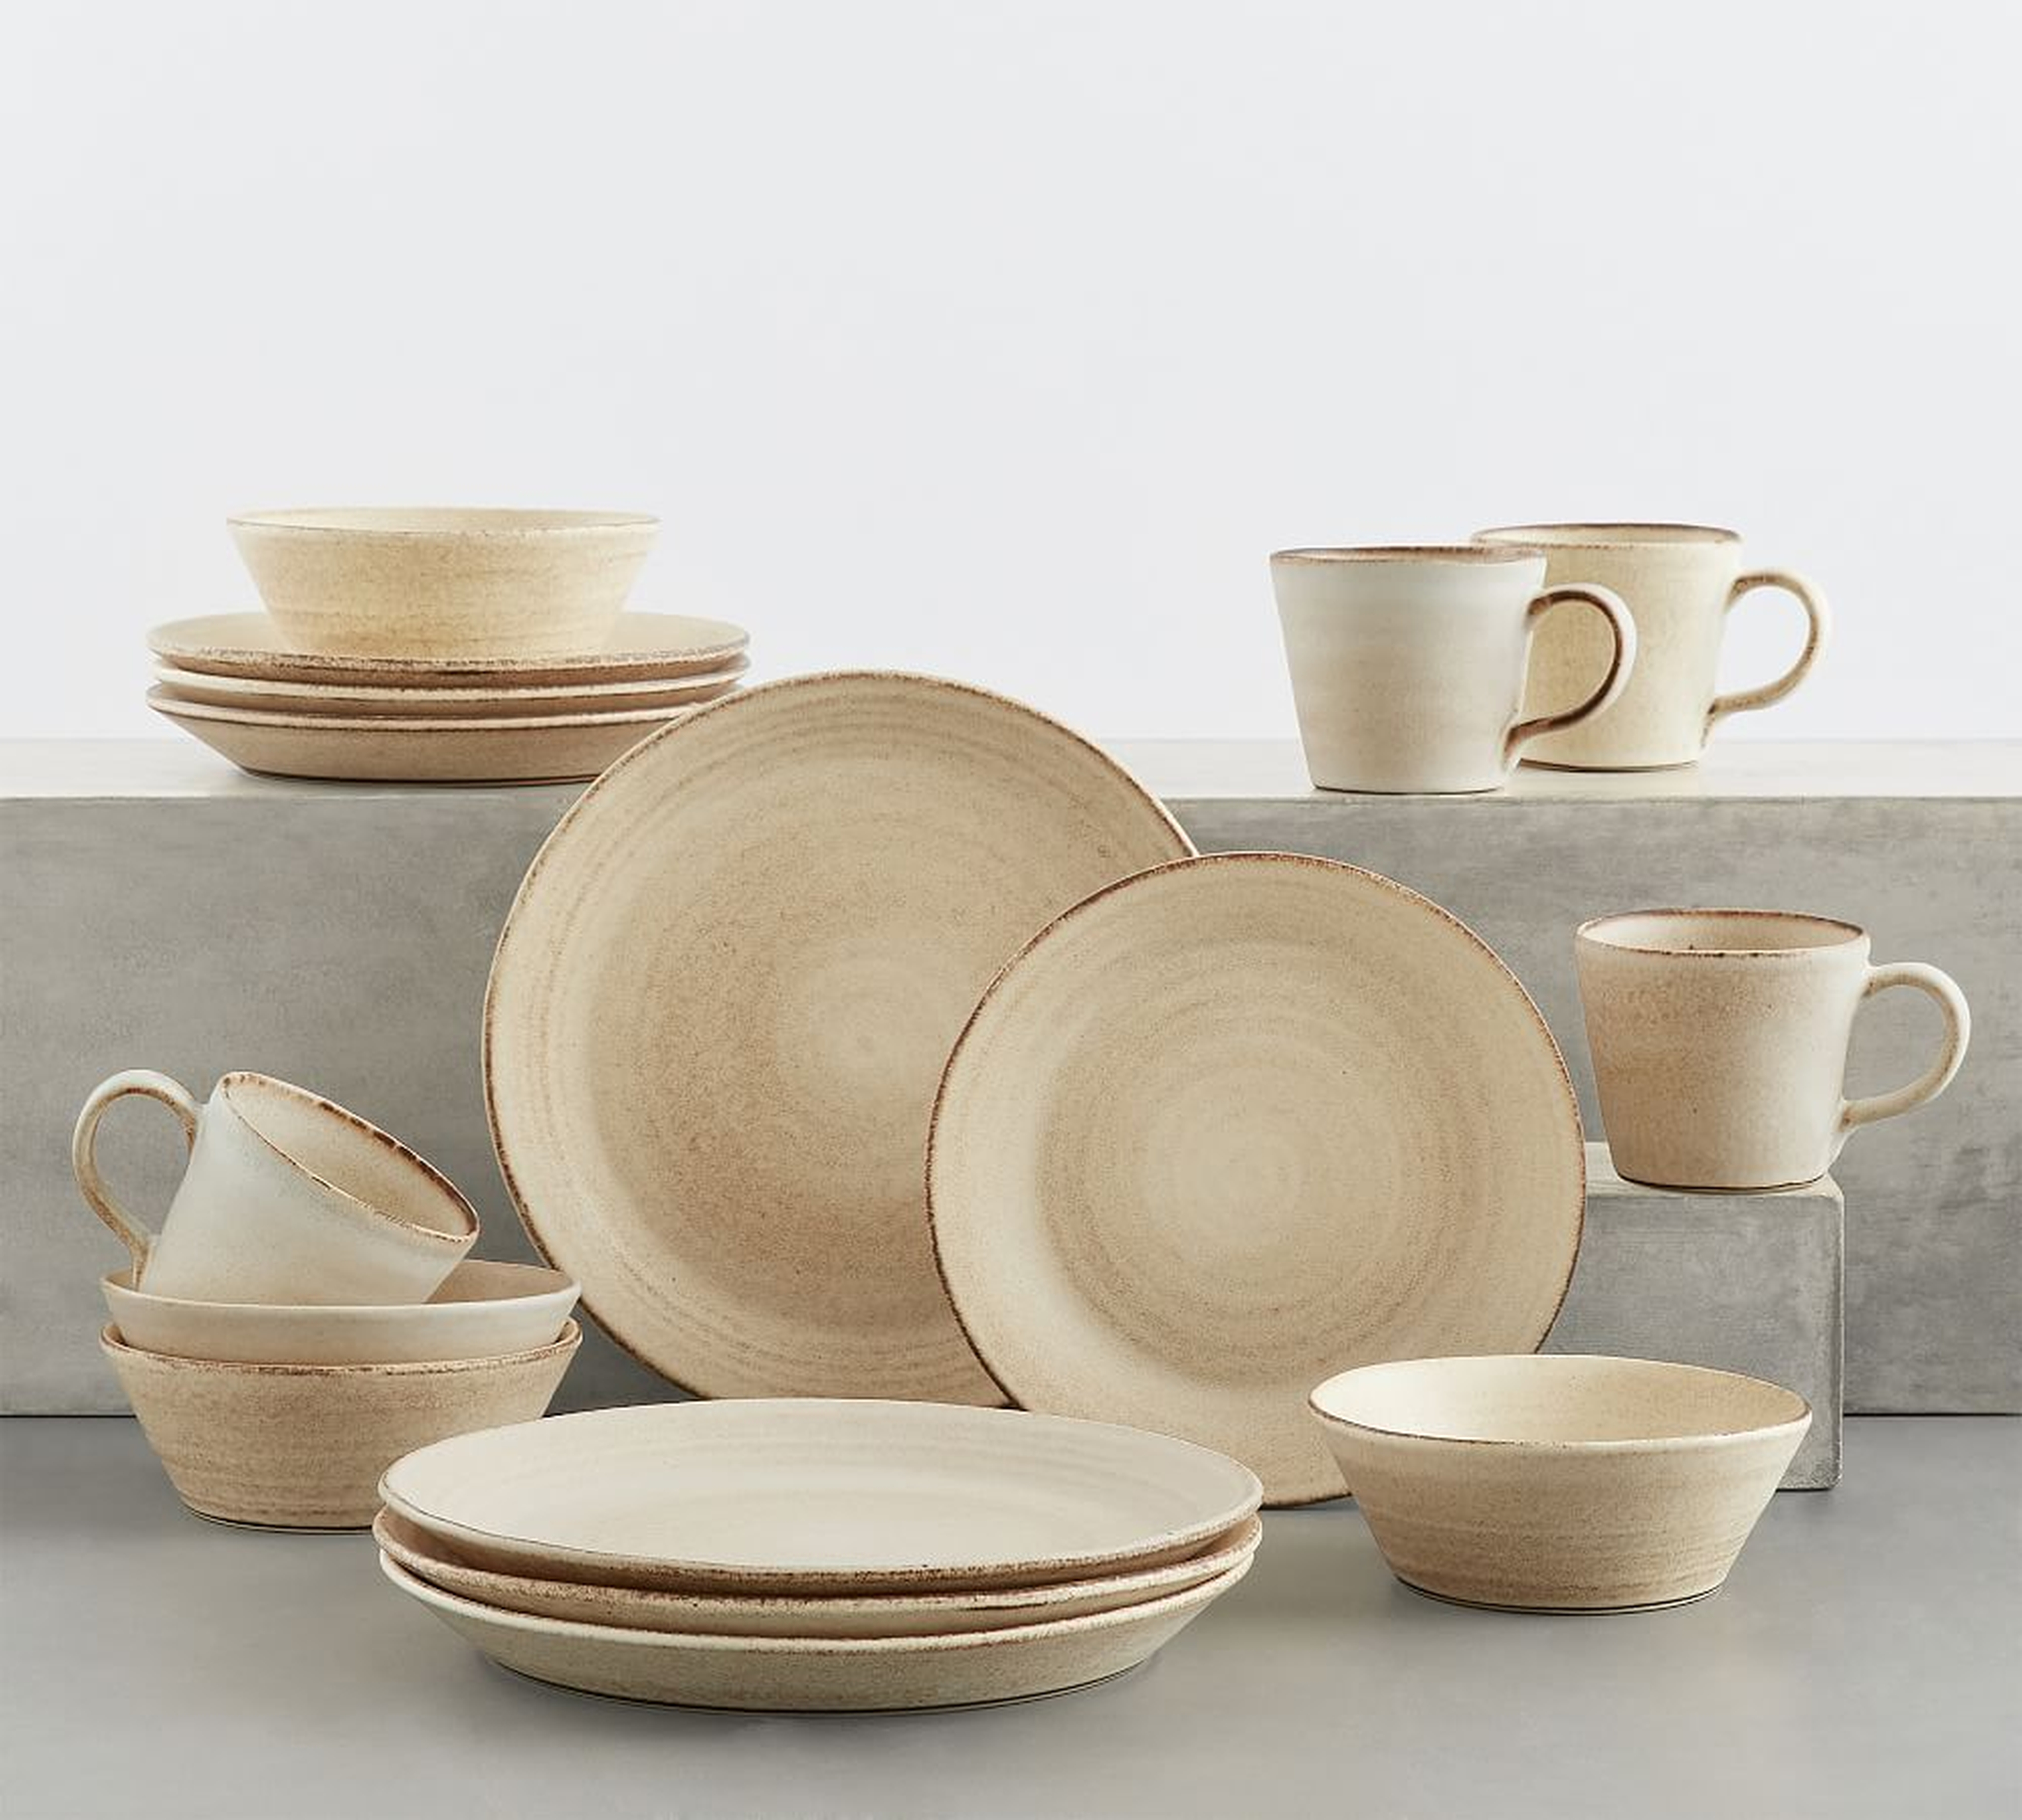 Larkin Reactive Glaze Stoneware 16-Piece Dinnerware Set - Sand - Pottery Barn